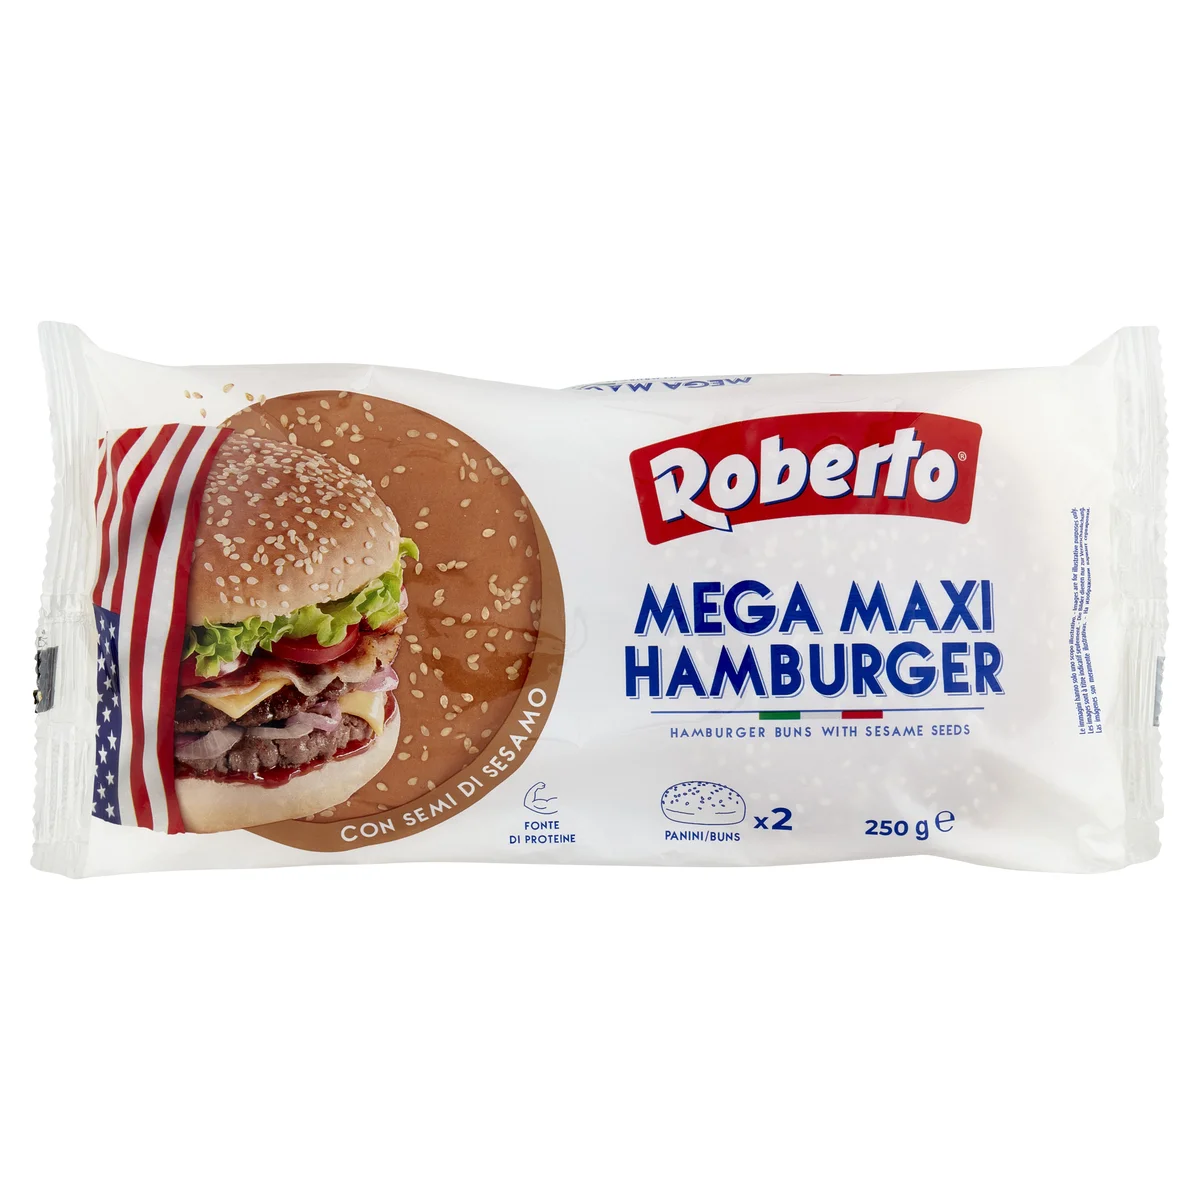 Roberto Mega Maxi Hamburger con Semi di Sesamo 2 Panini 250 g